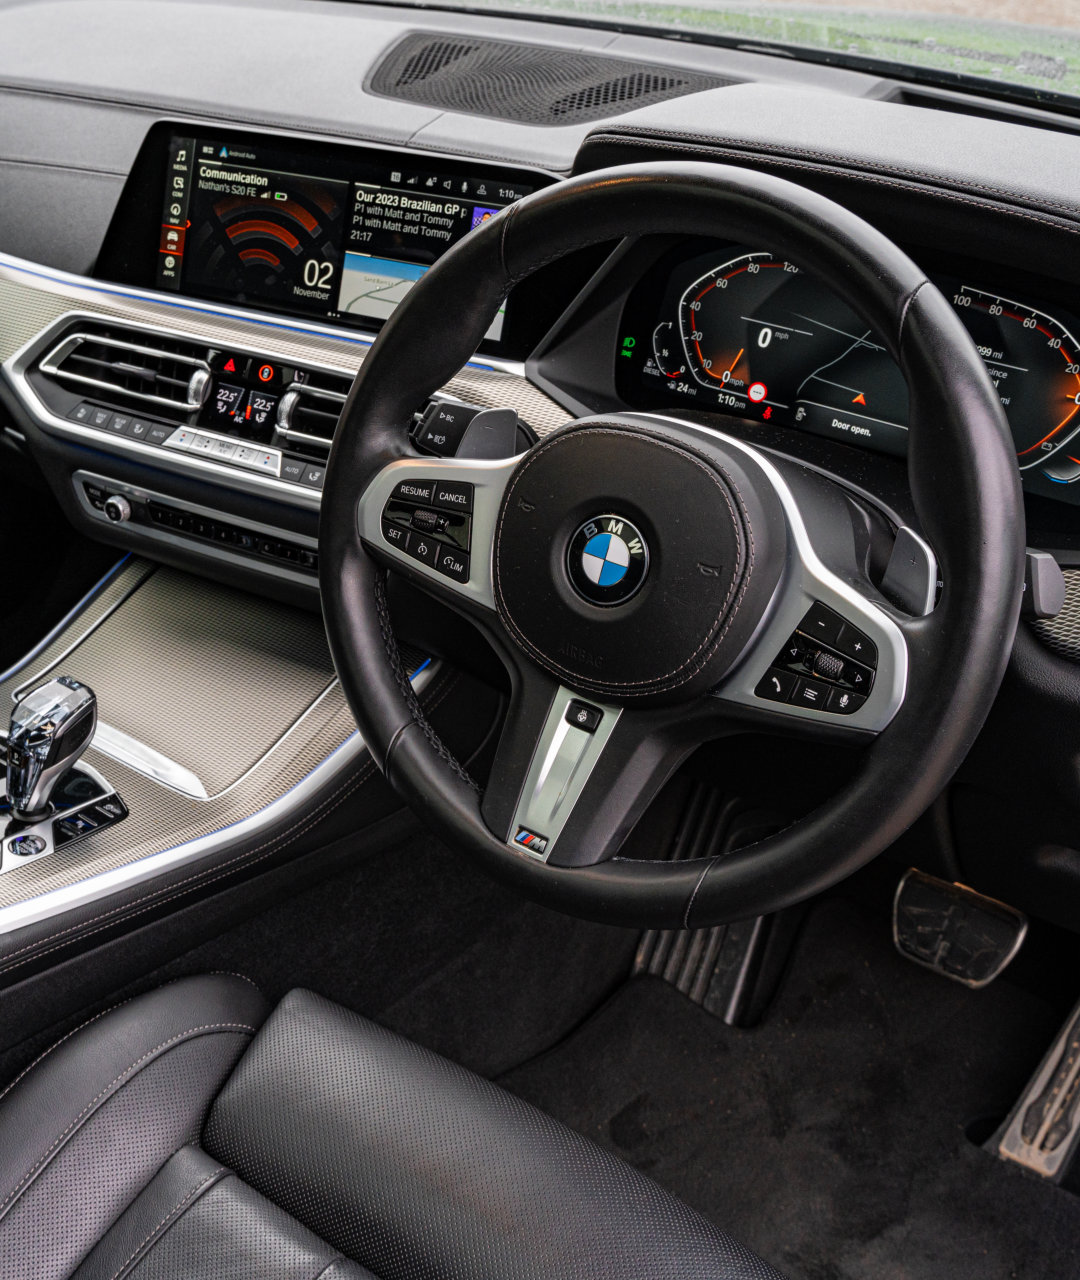 2019 BMW X5 40d M Sport driver side interior